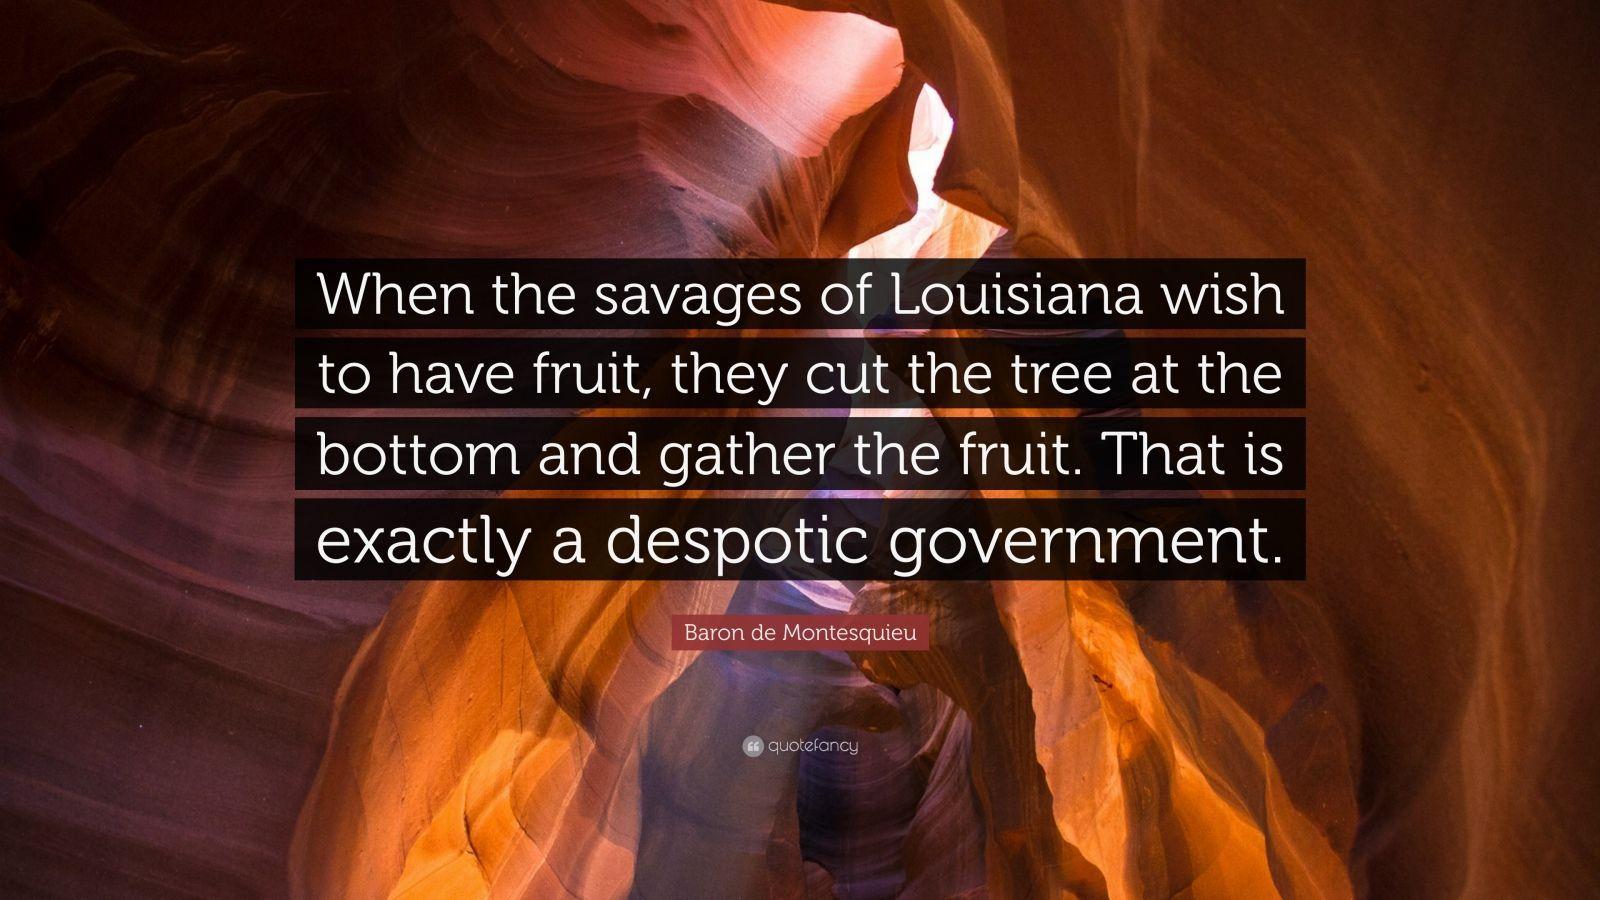 Baron de Montesquieu Quote: “When the savages of Louisiana wish to